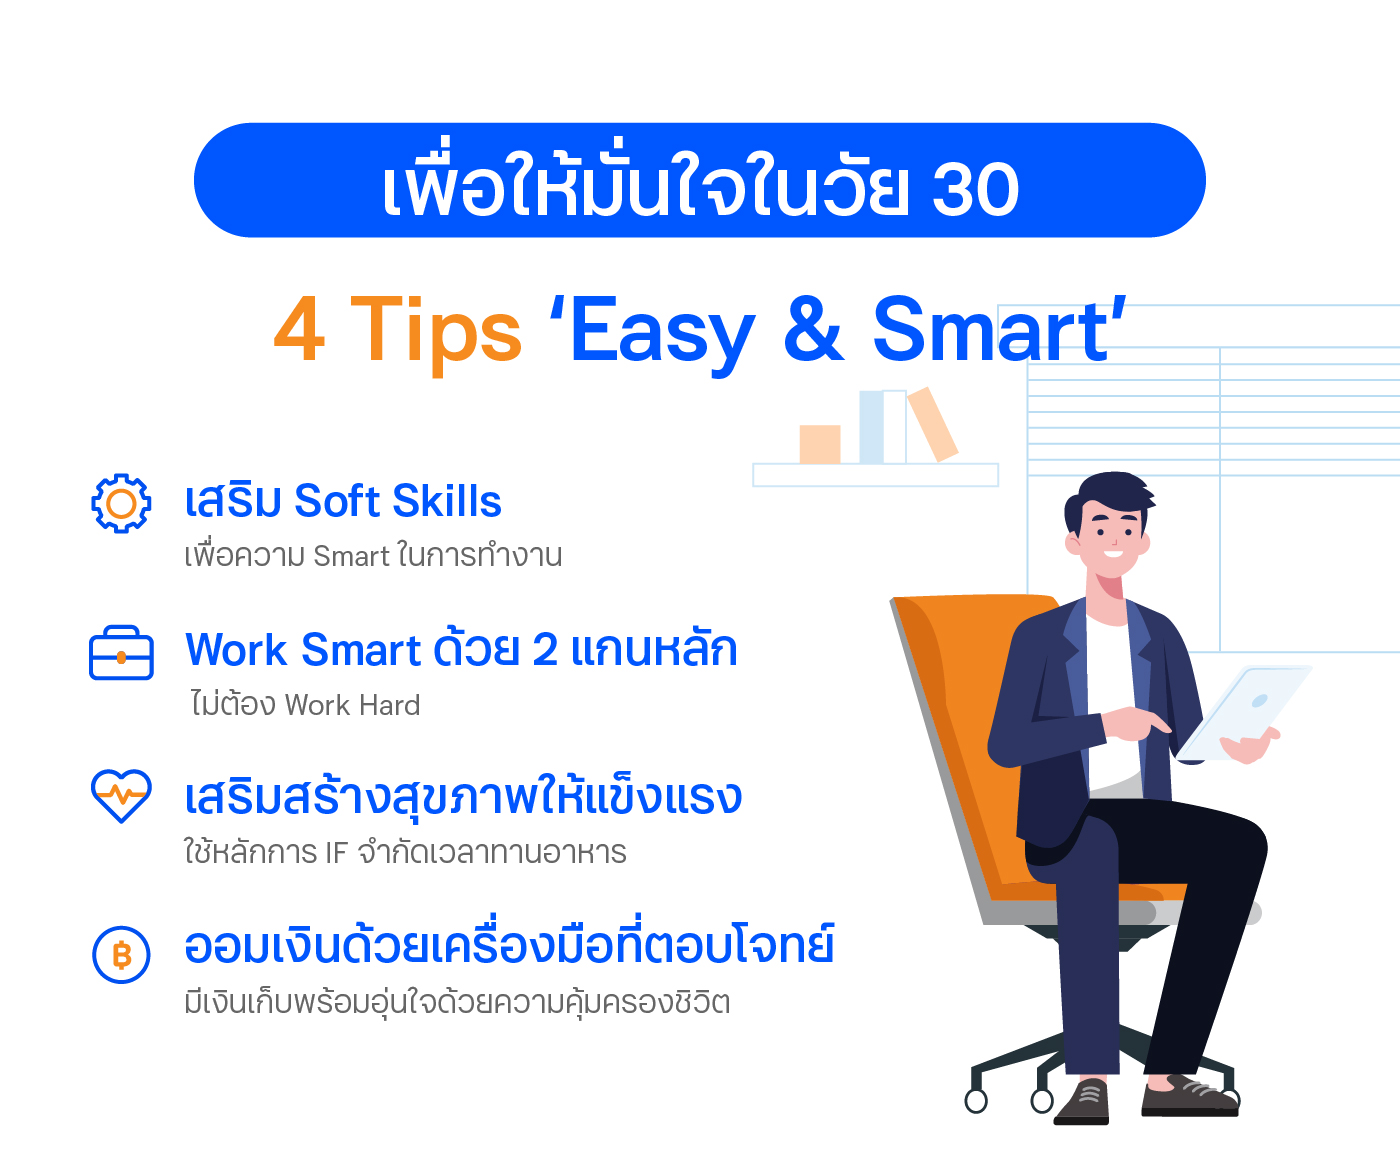 Tip 1 เสริม Soft Skills อย่างง่ายๆ เพื่อความ Smart ในการทำงาน